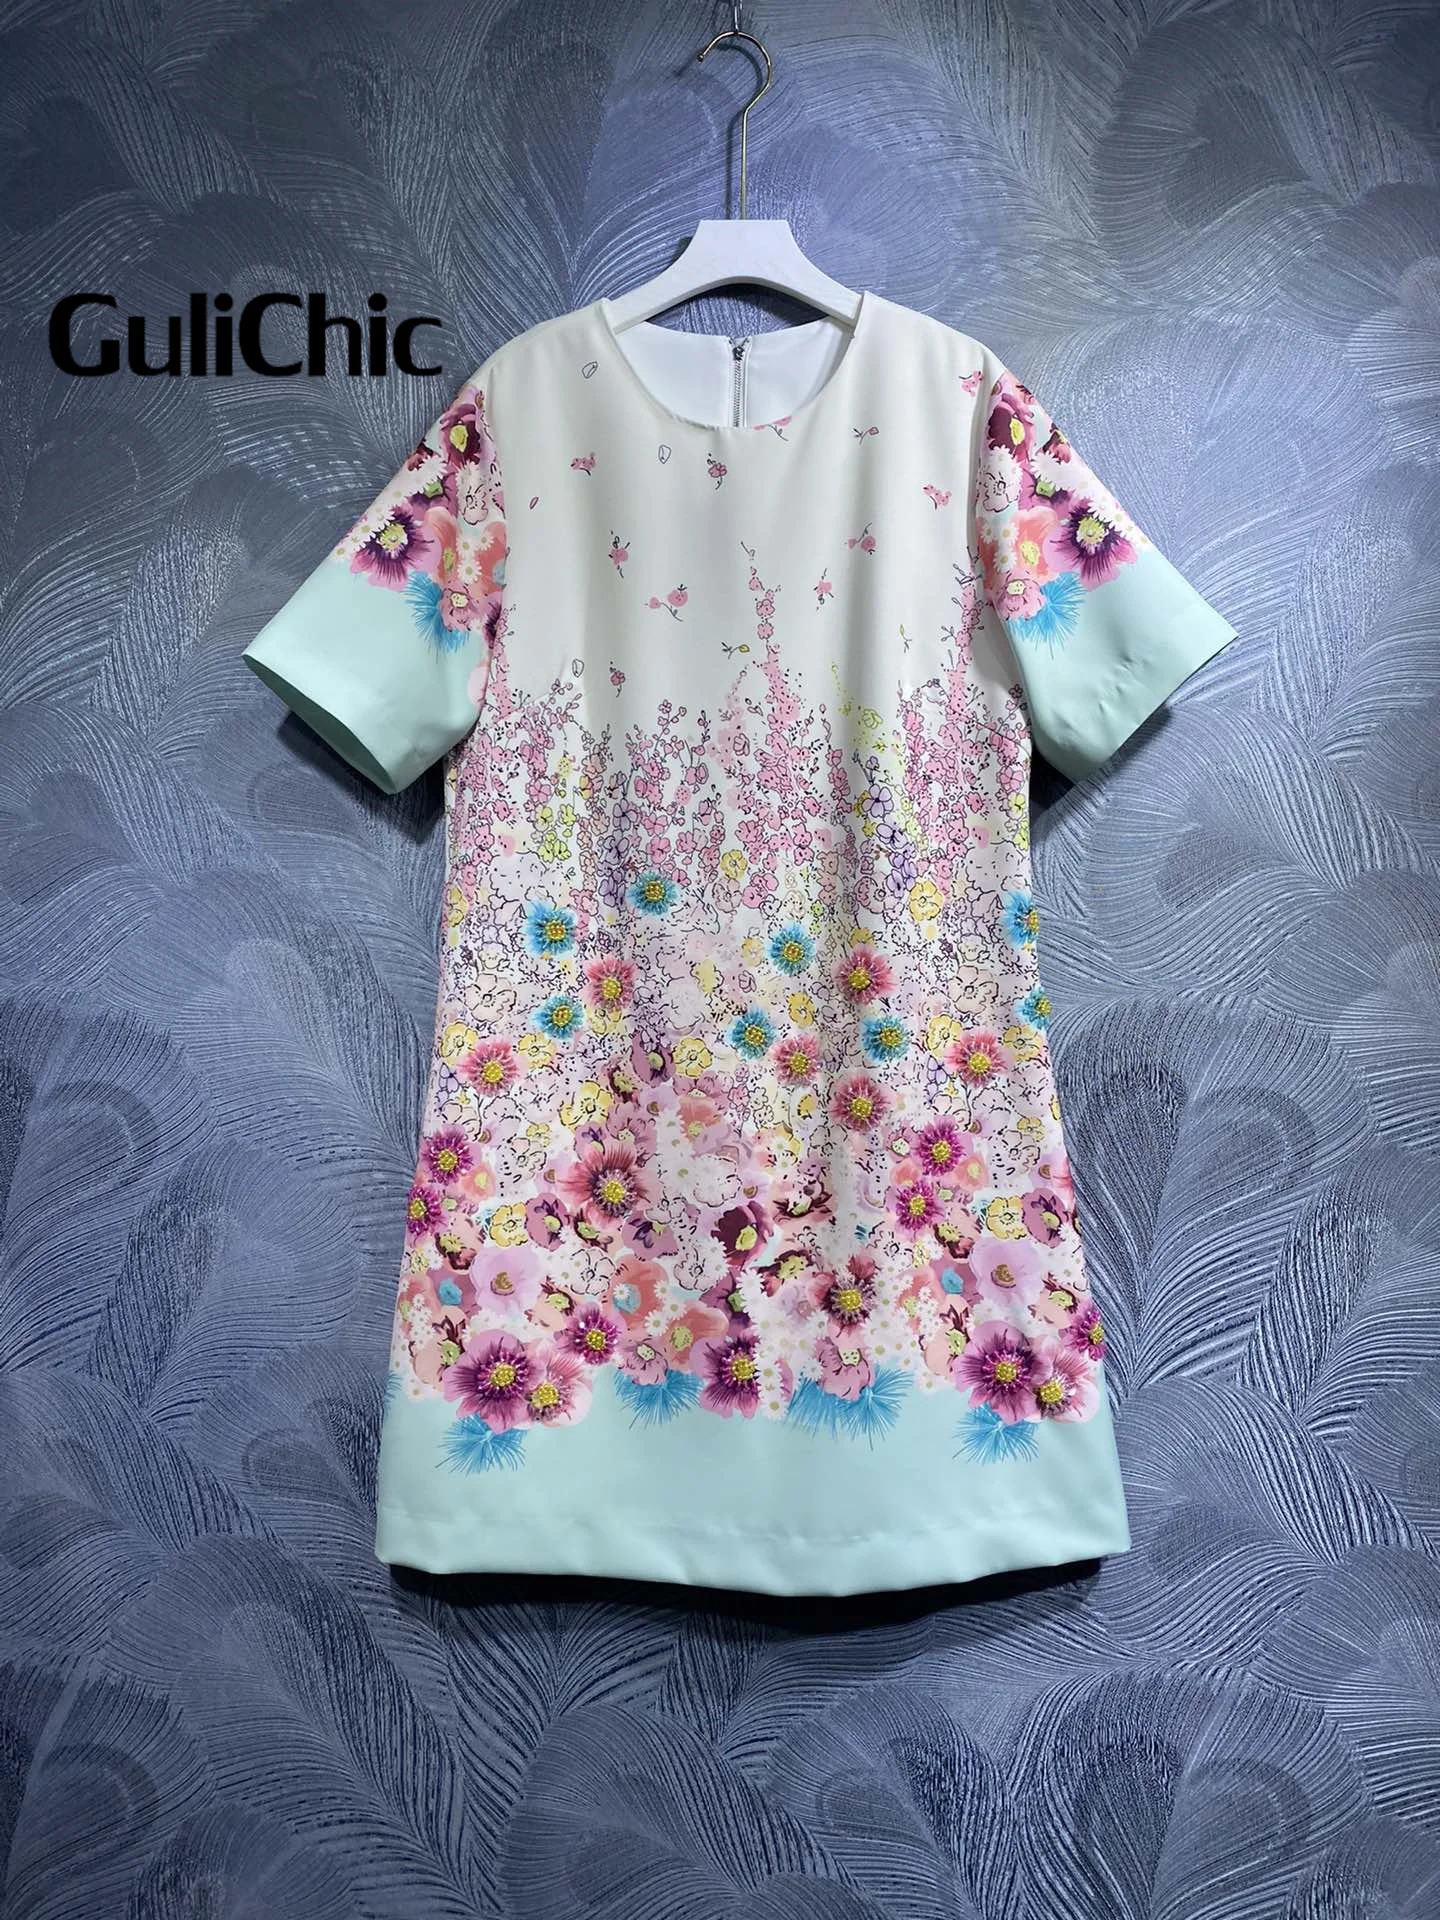 3.30 GuliChic Women Fashion Sweet Floral Print Beading Decorate O-Neck Short Sleeve Back Zipper Loose Casual Dress